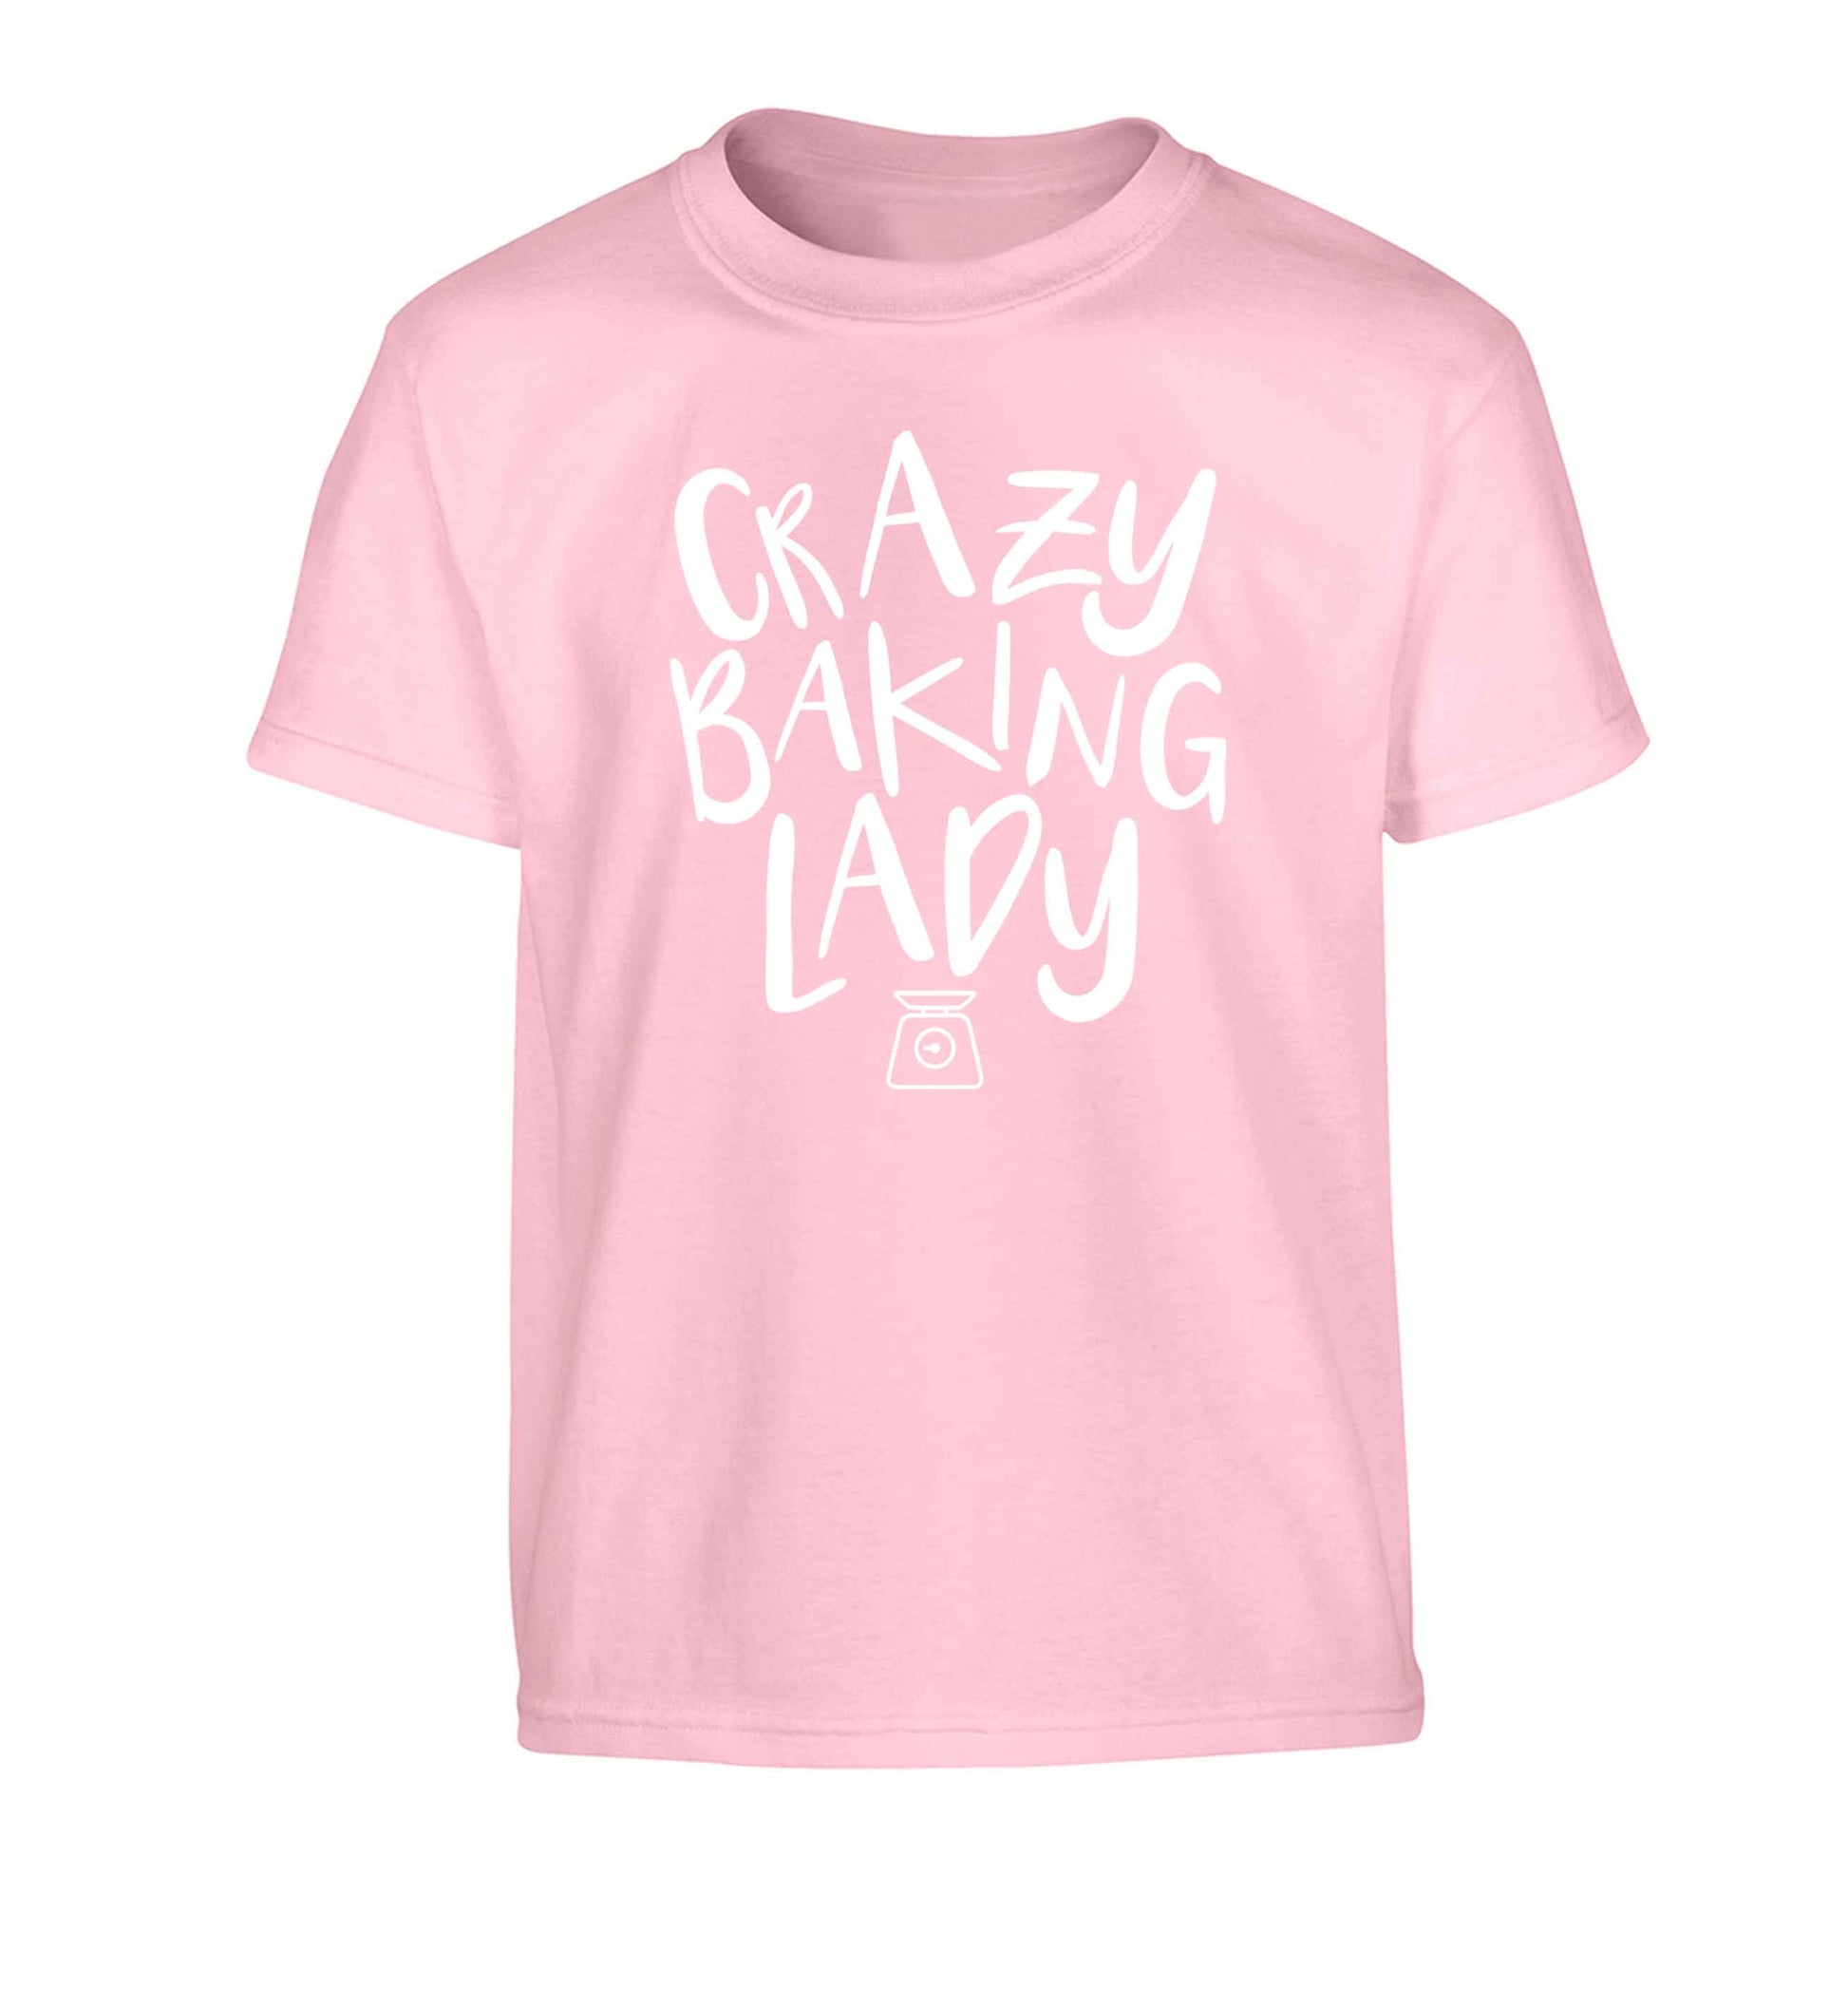 Crazy baking lady Children's light pink Tshirt 12-13 Years